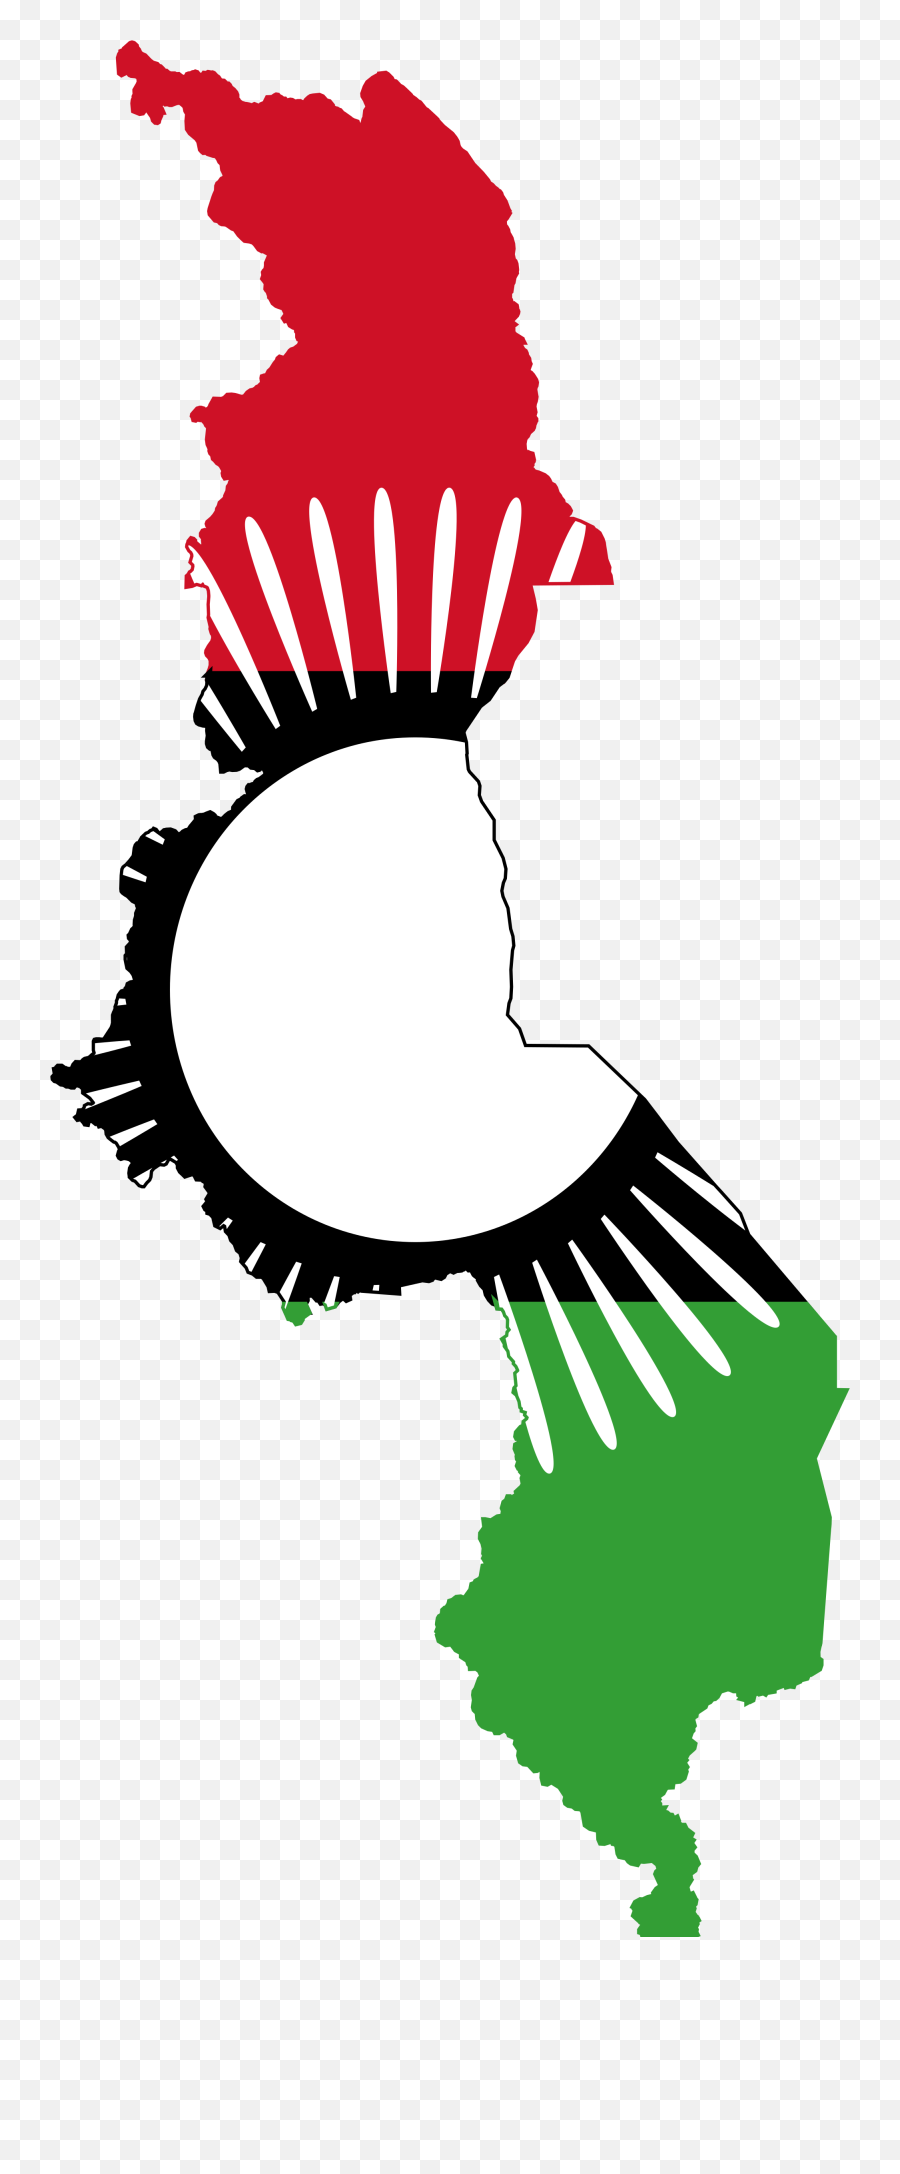 Malawi And The Unstoppable Destiny - Malawi Map And Flag Flag Map Of Malawi Emoji,Croatia Flag Emoji